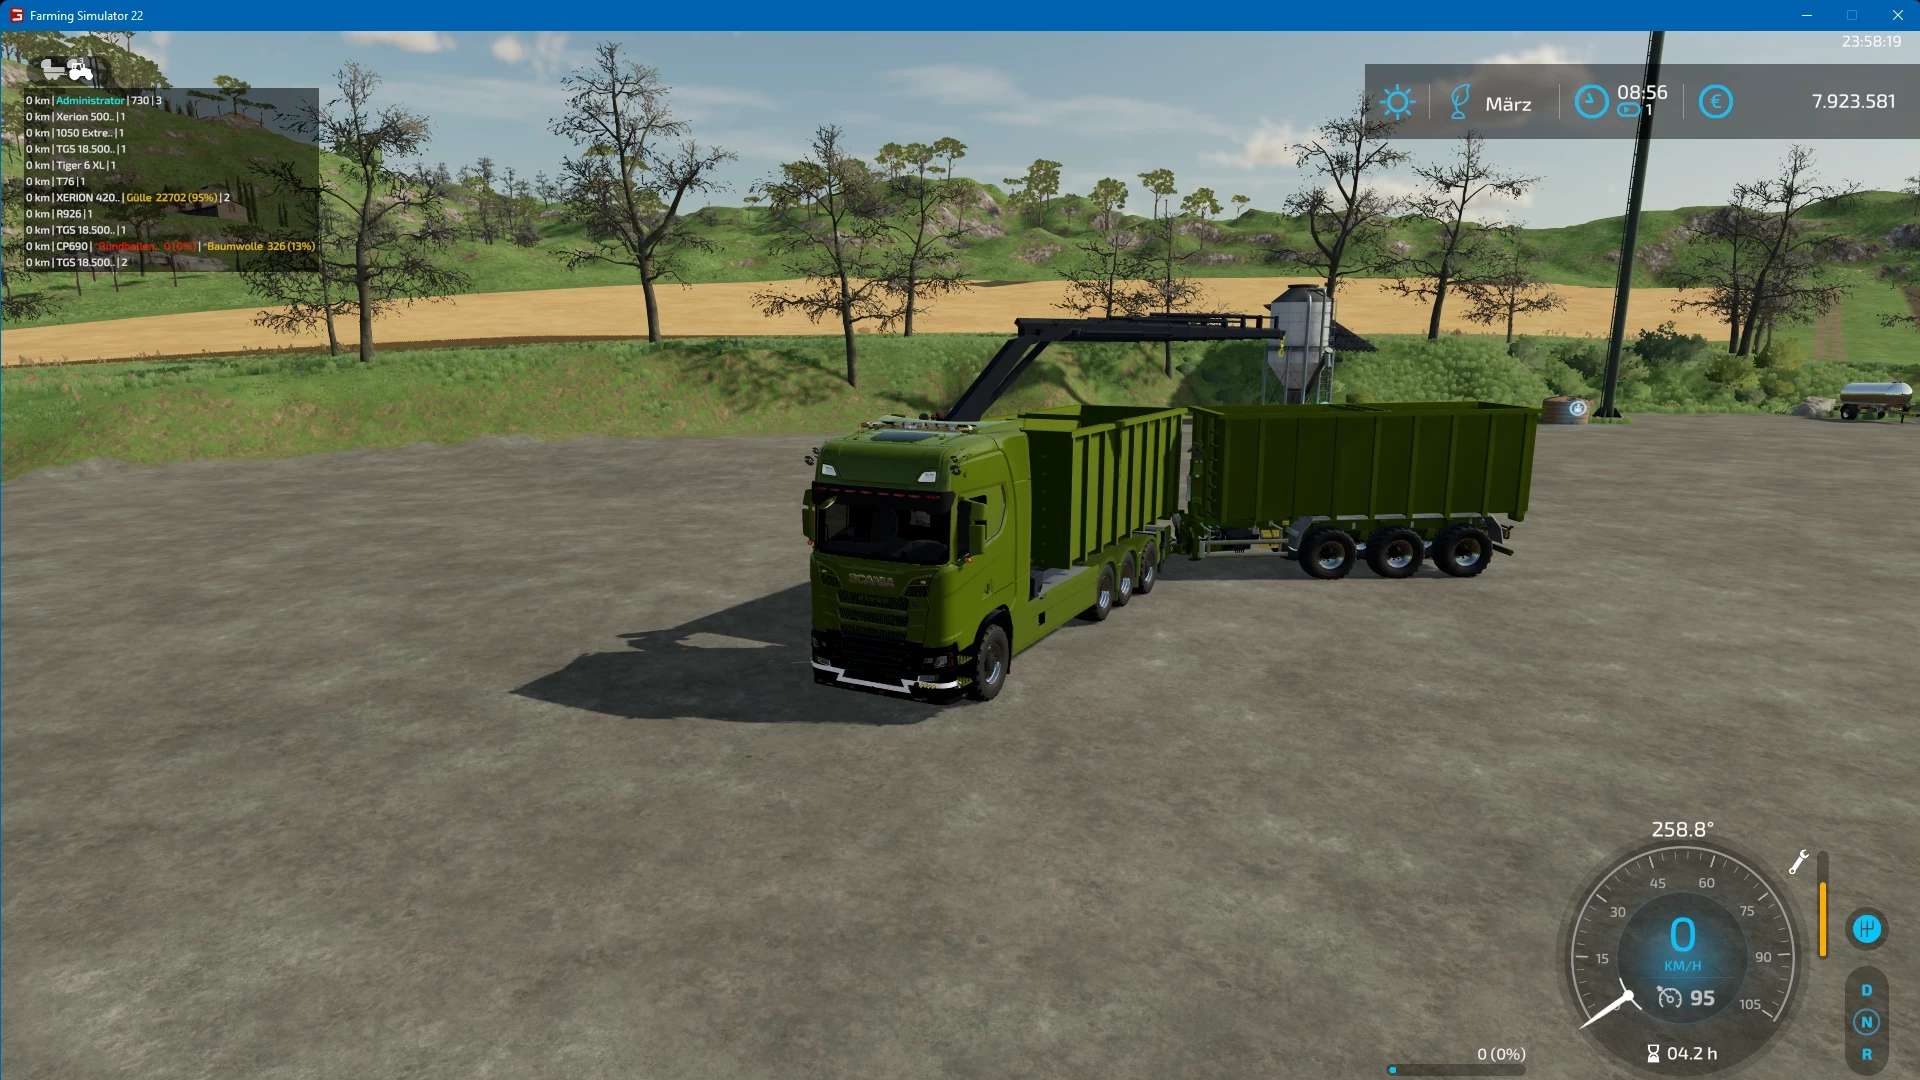 Scania S620 Hkl Hooklift And Crane Truck V10 Ls22 Farming Simulator 22 Mod Ls22 Mod 9983